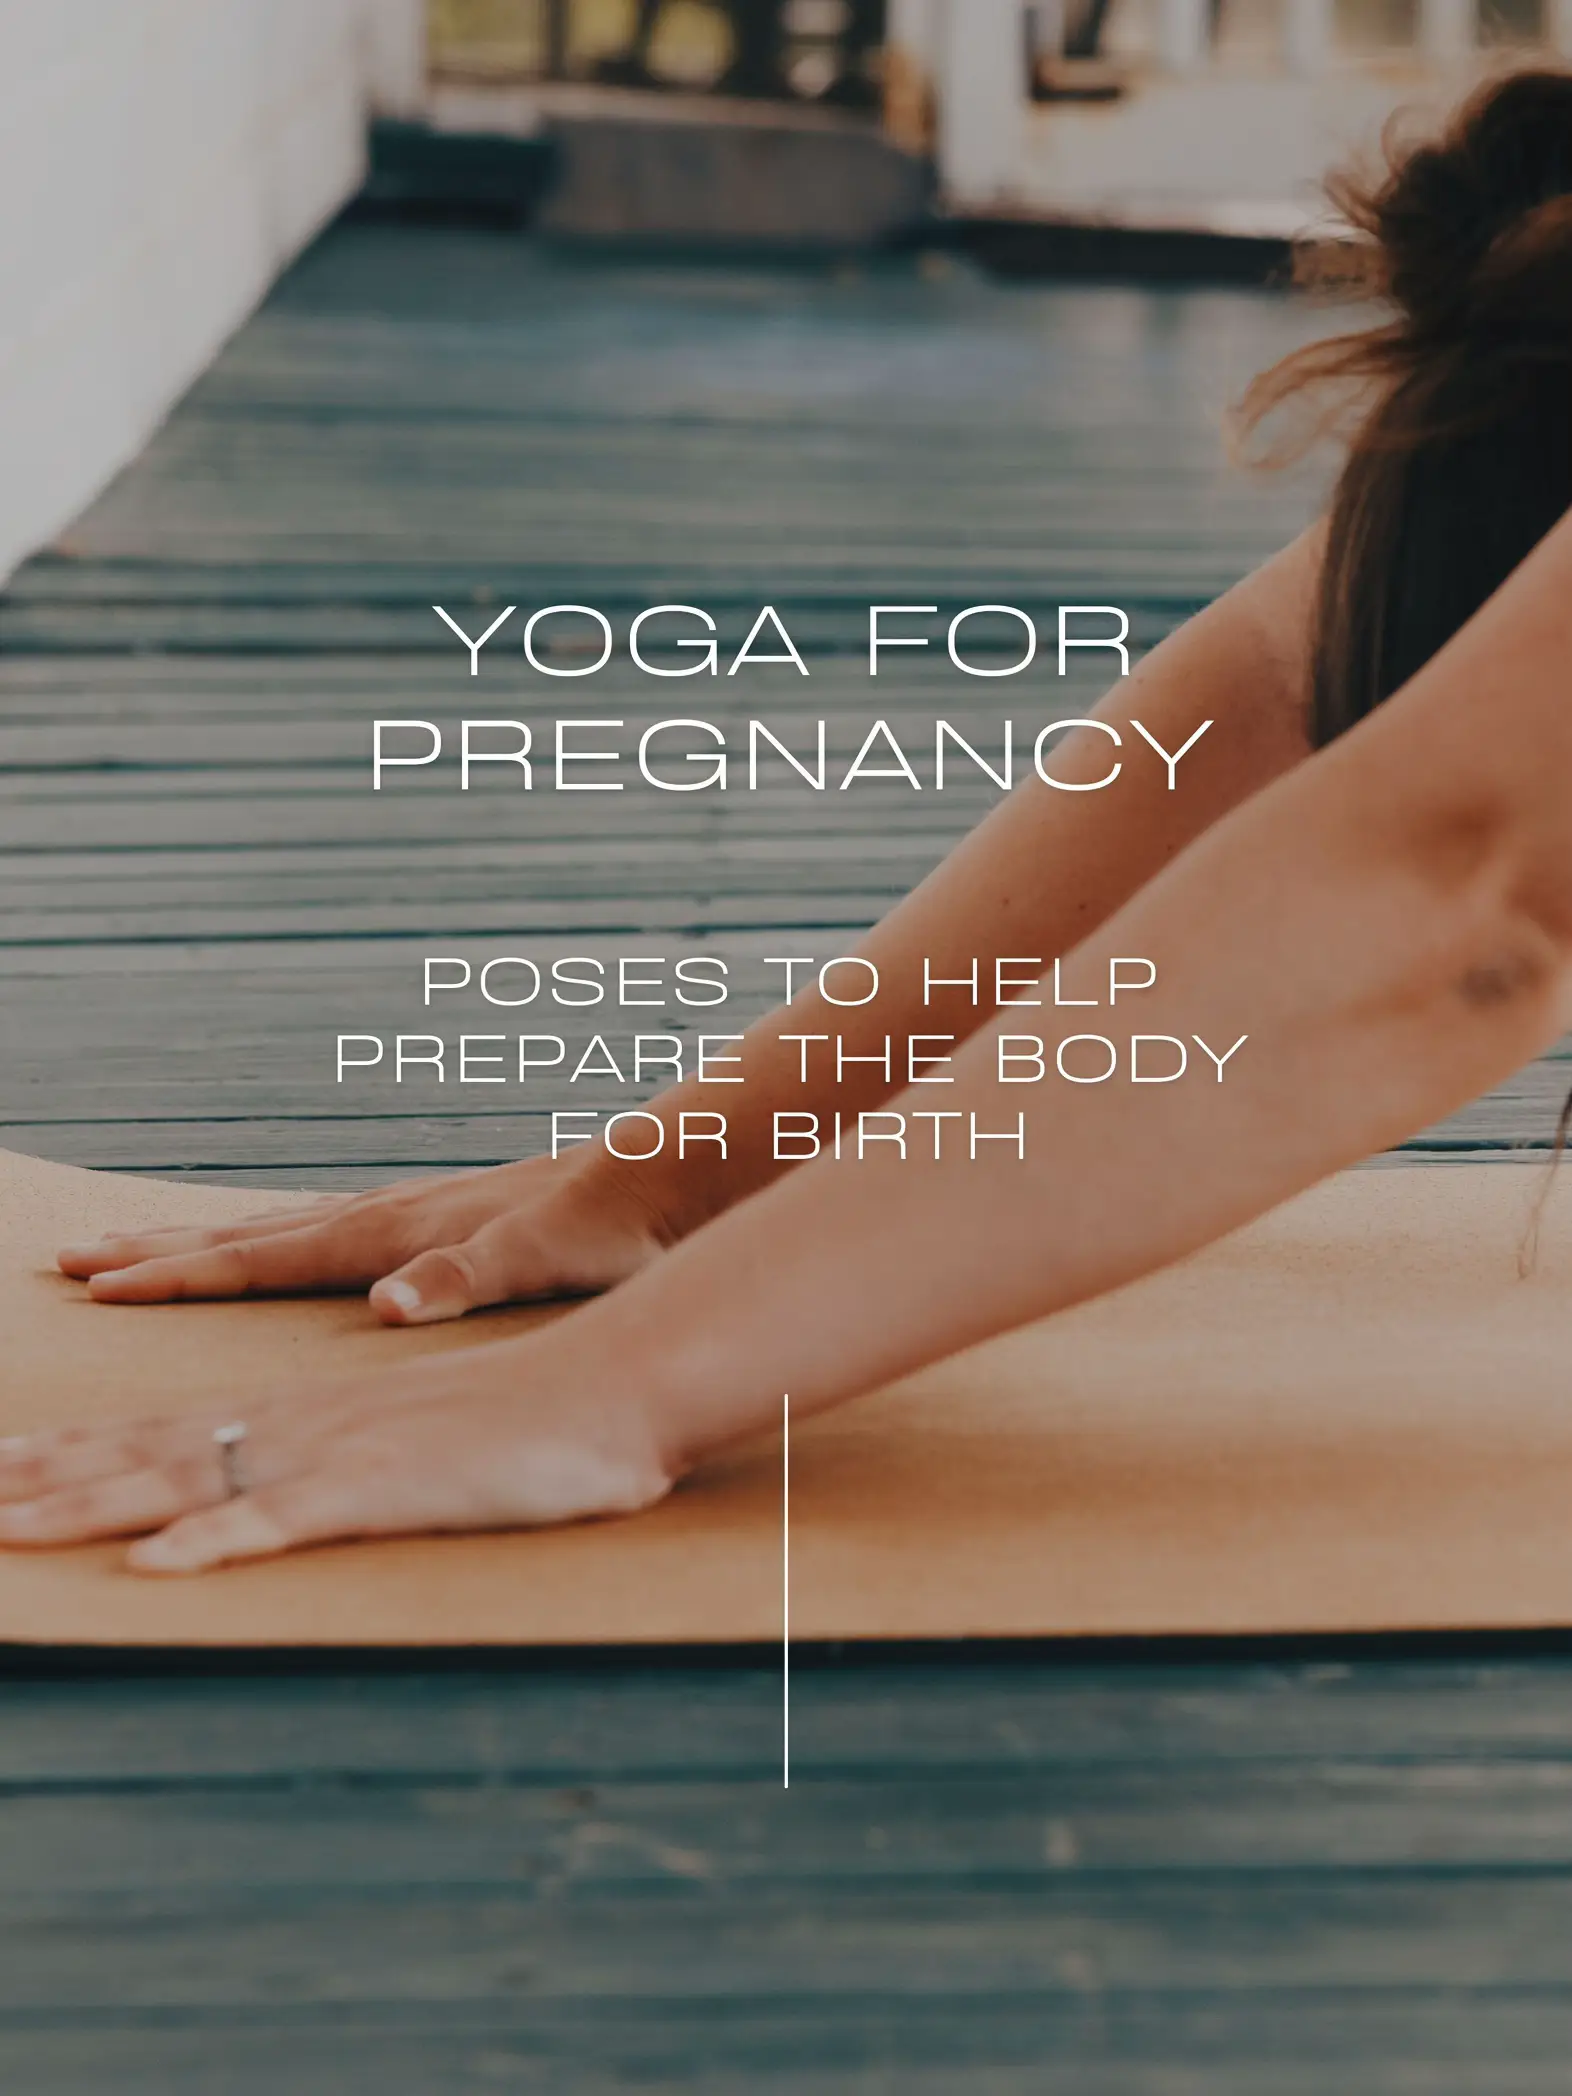 DIGITAL Prenatal Yoga Poster/ Yoga/ Doula/ Midwife/ Birth/ Yoga